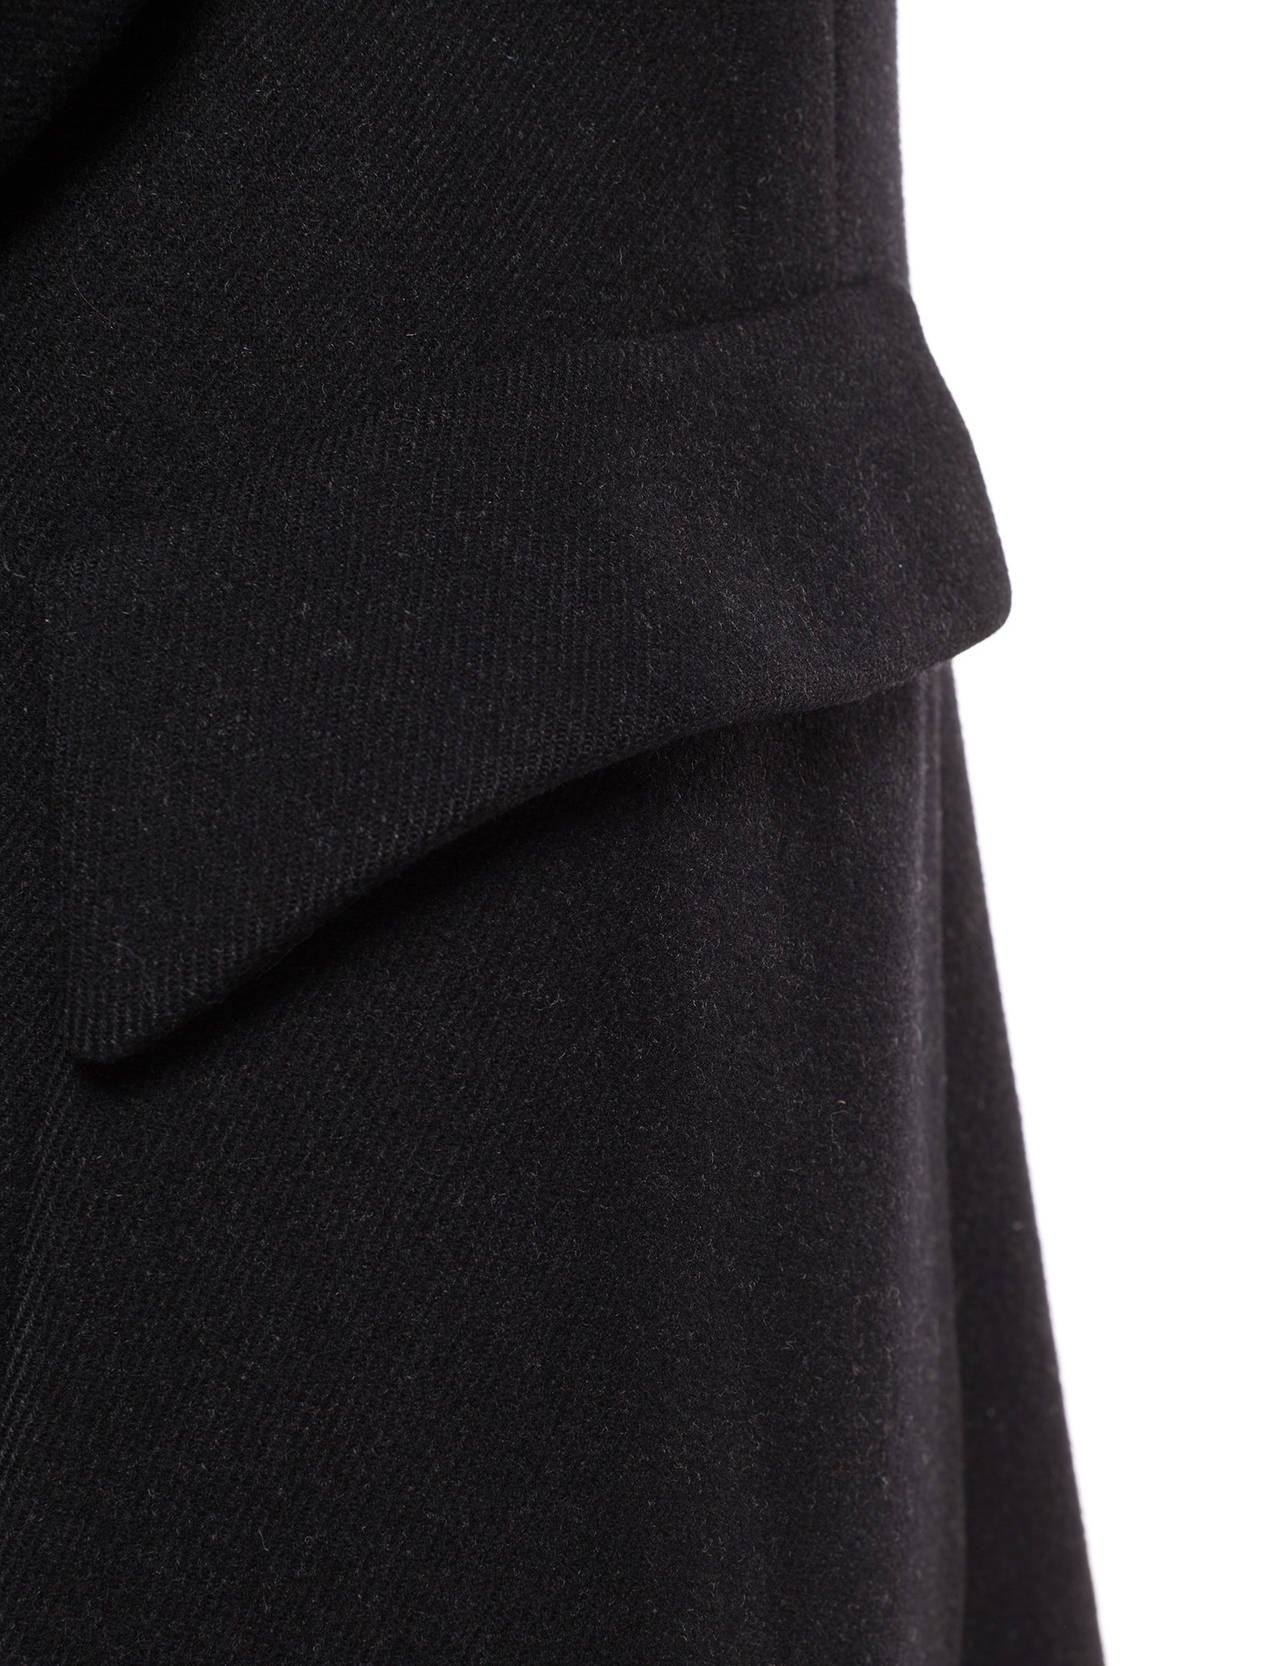 Prada minimal Wool coat with collar detail and large pockets, Sz. M 4